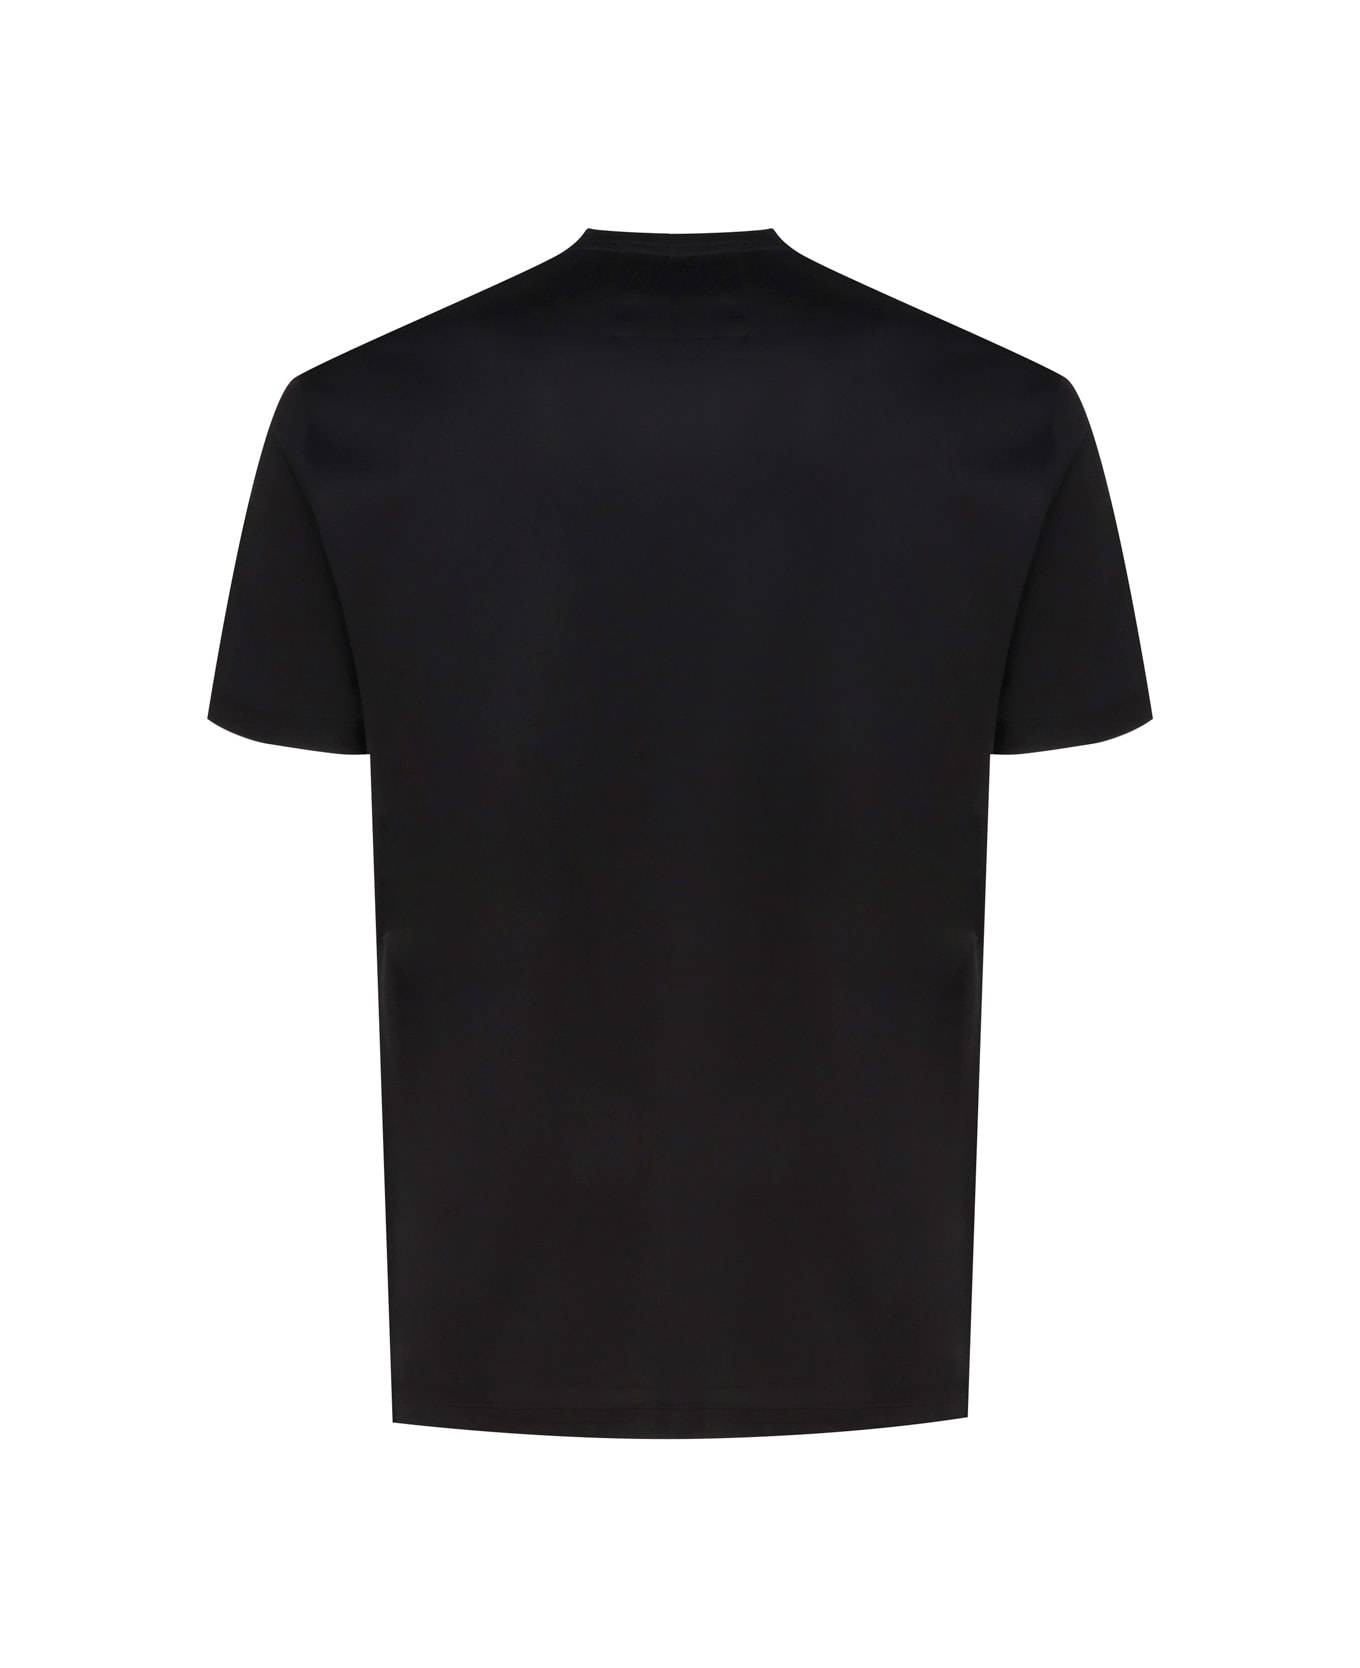 Emporio Armani Cotton T-shirt - Black